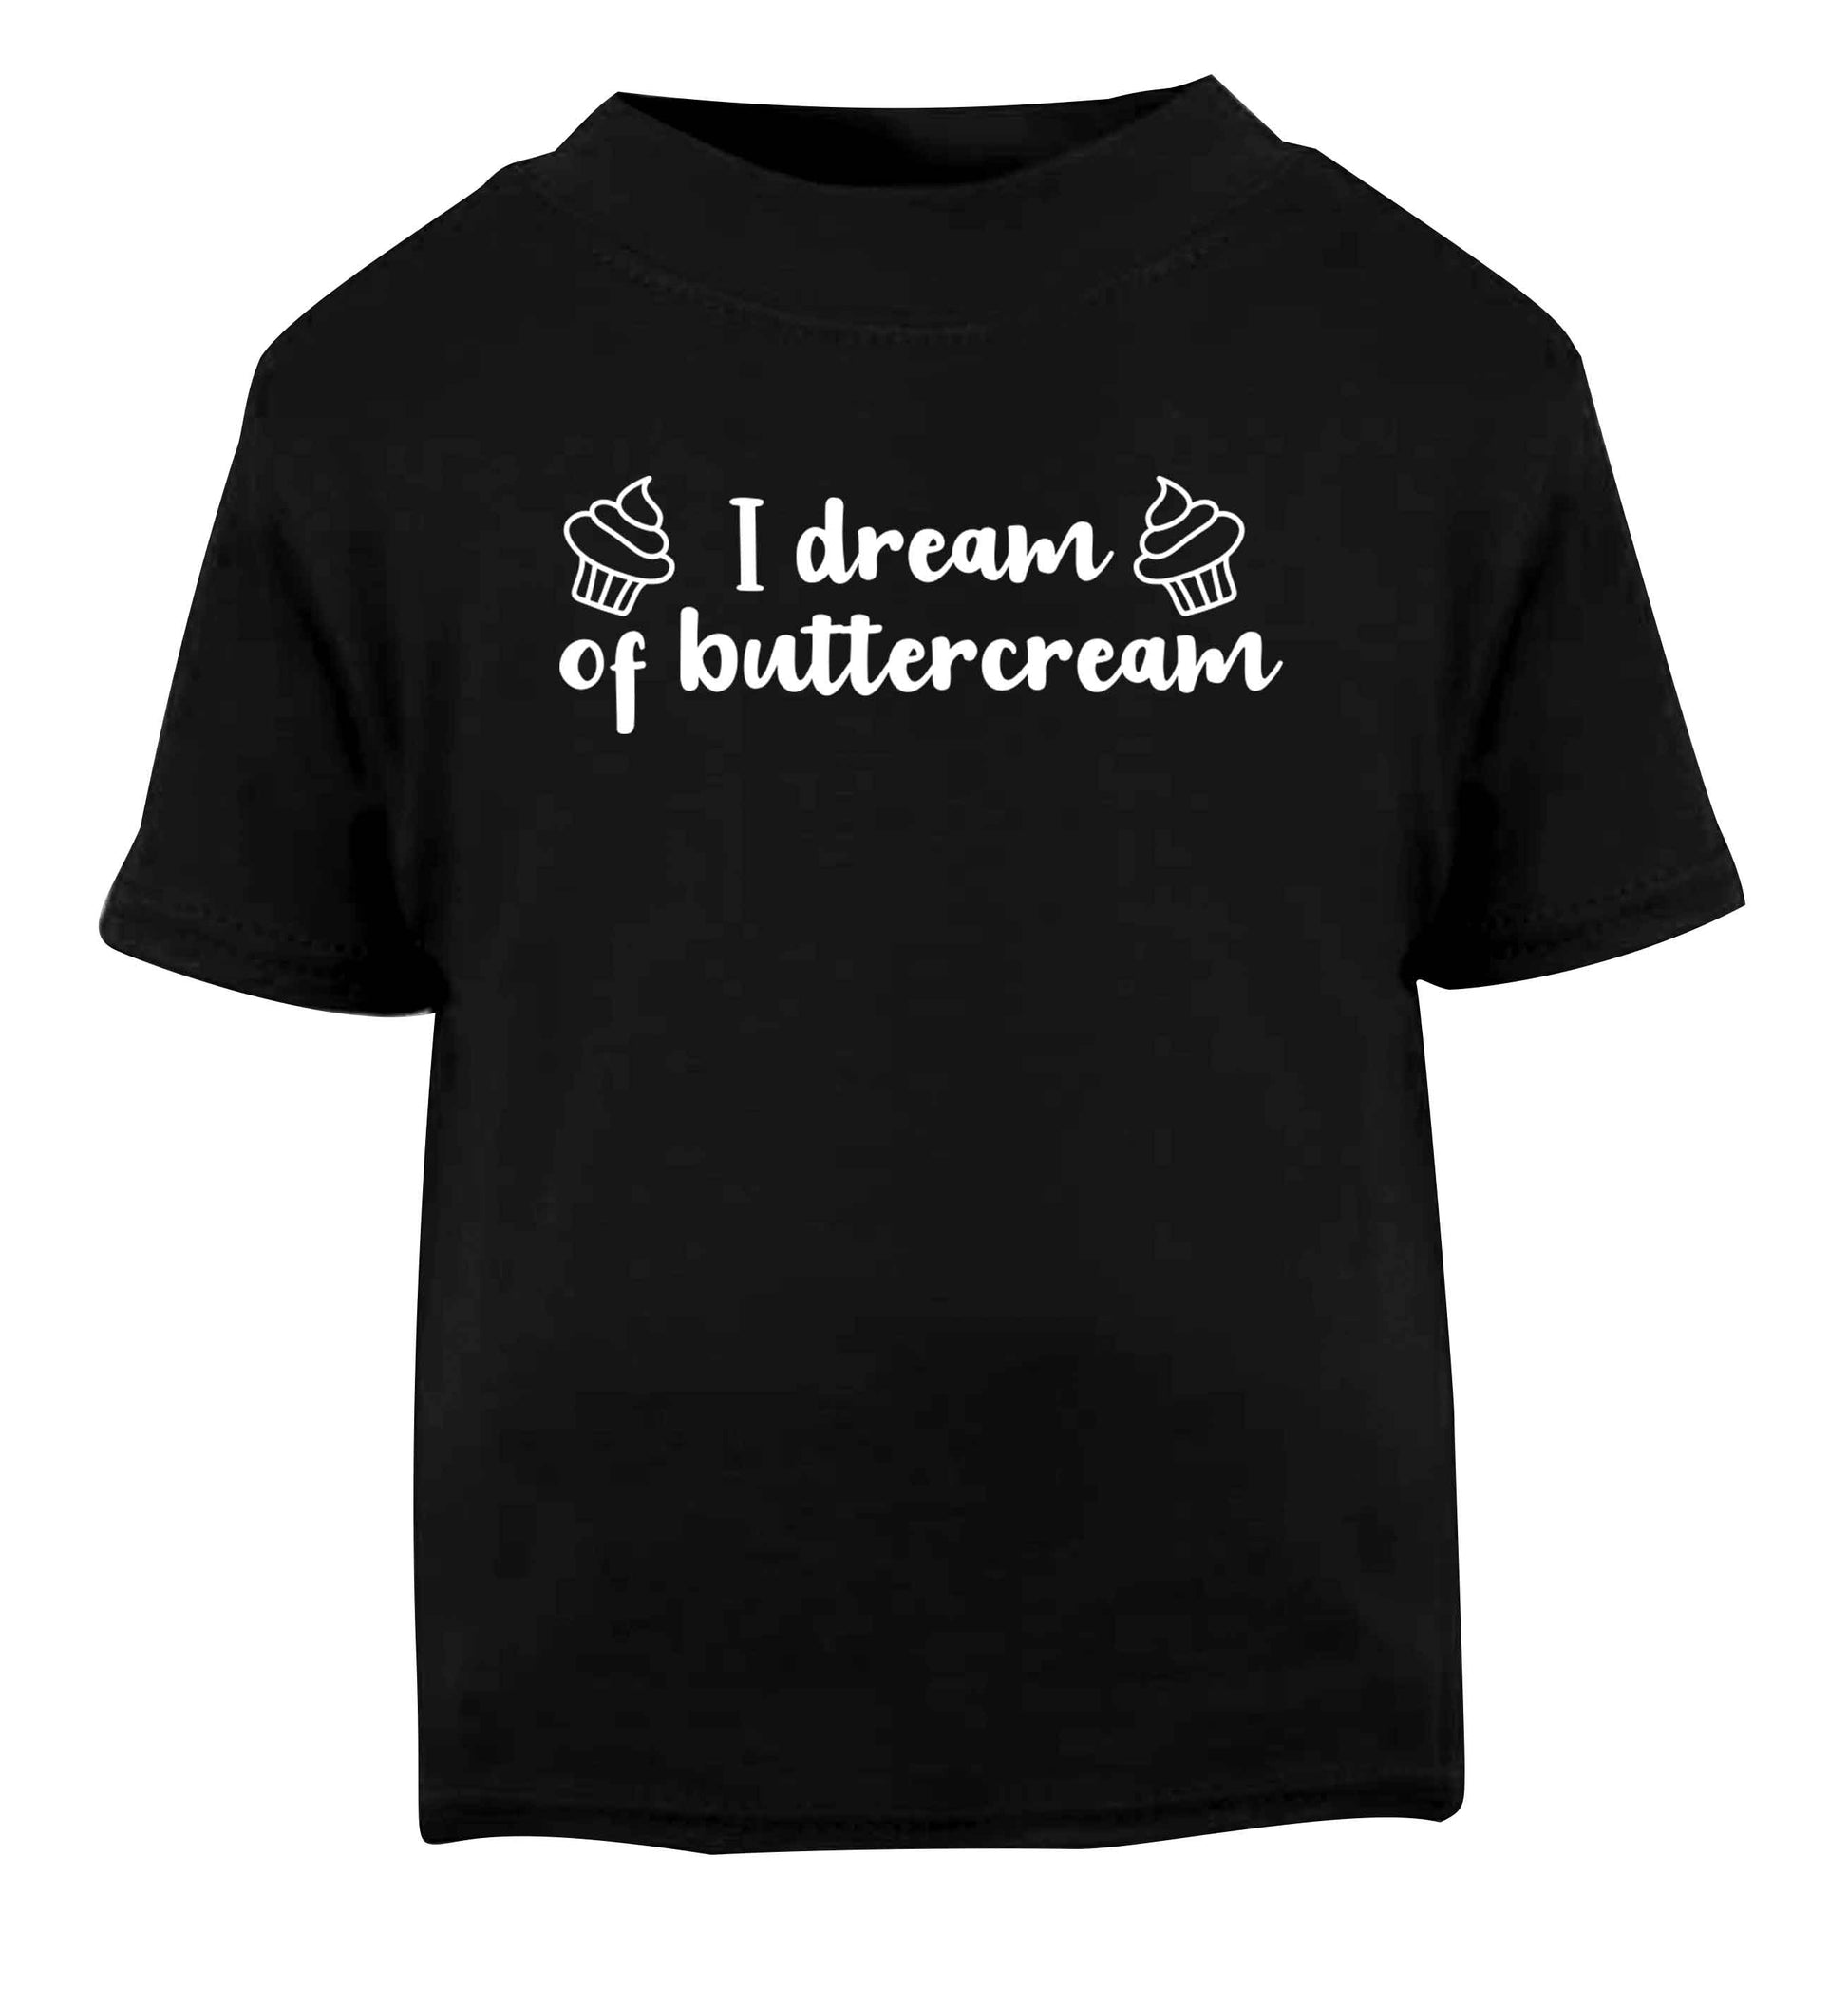 I dream of buttercream Black Baby Toddler Tshirt 2 years